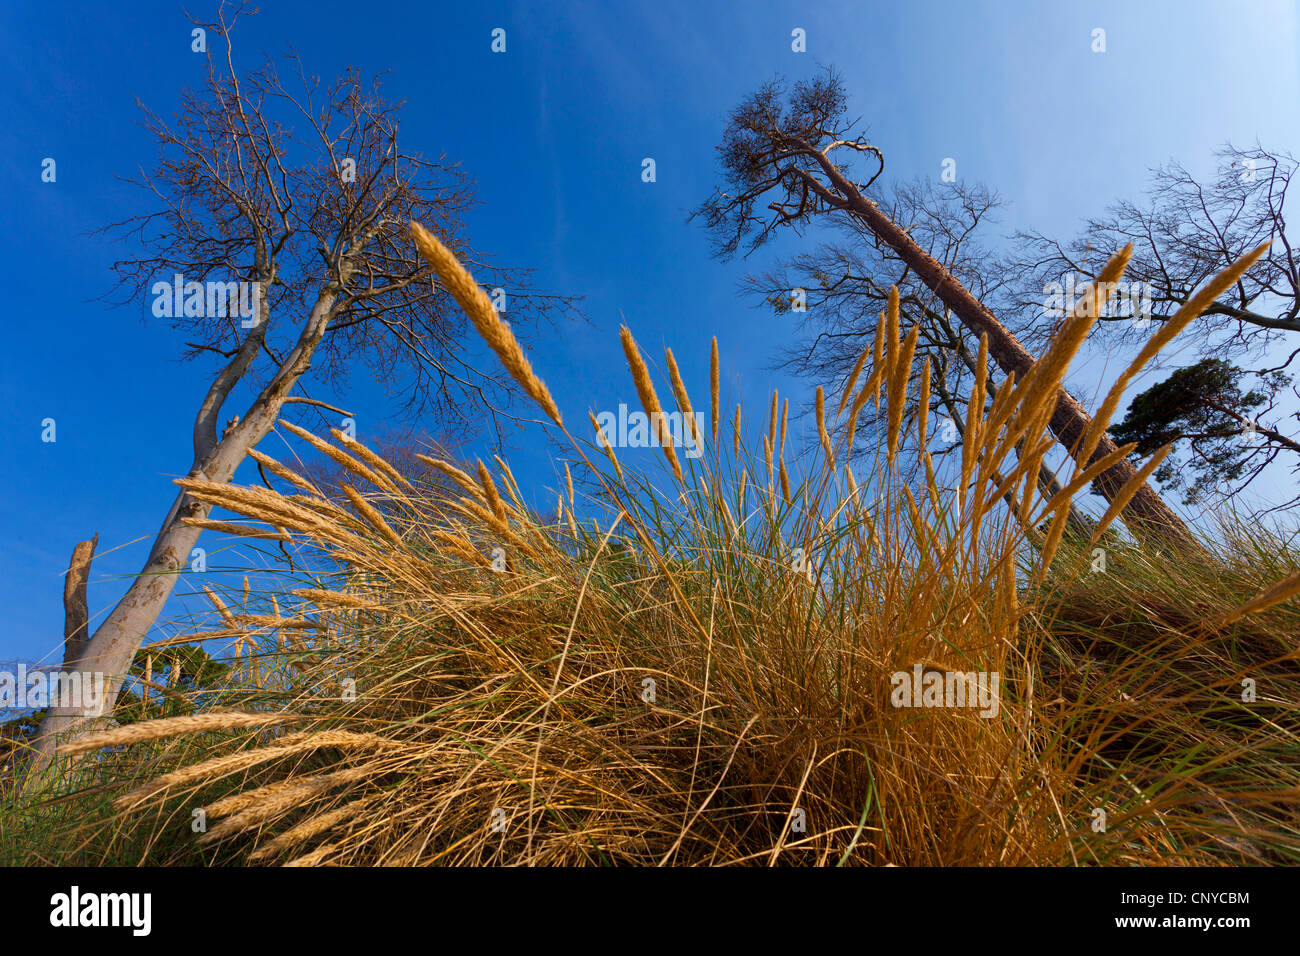 beach grass, European beachgrass, marram grass, psamma, sea sand-reed (Ammophila arenaria), on a dike with trees, Germany, Mecklenburg-Western Pomerania, Darss, Prerow Stock Photo